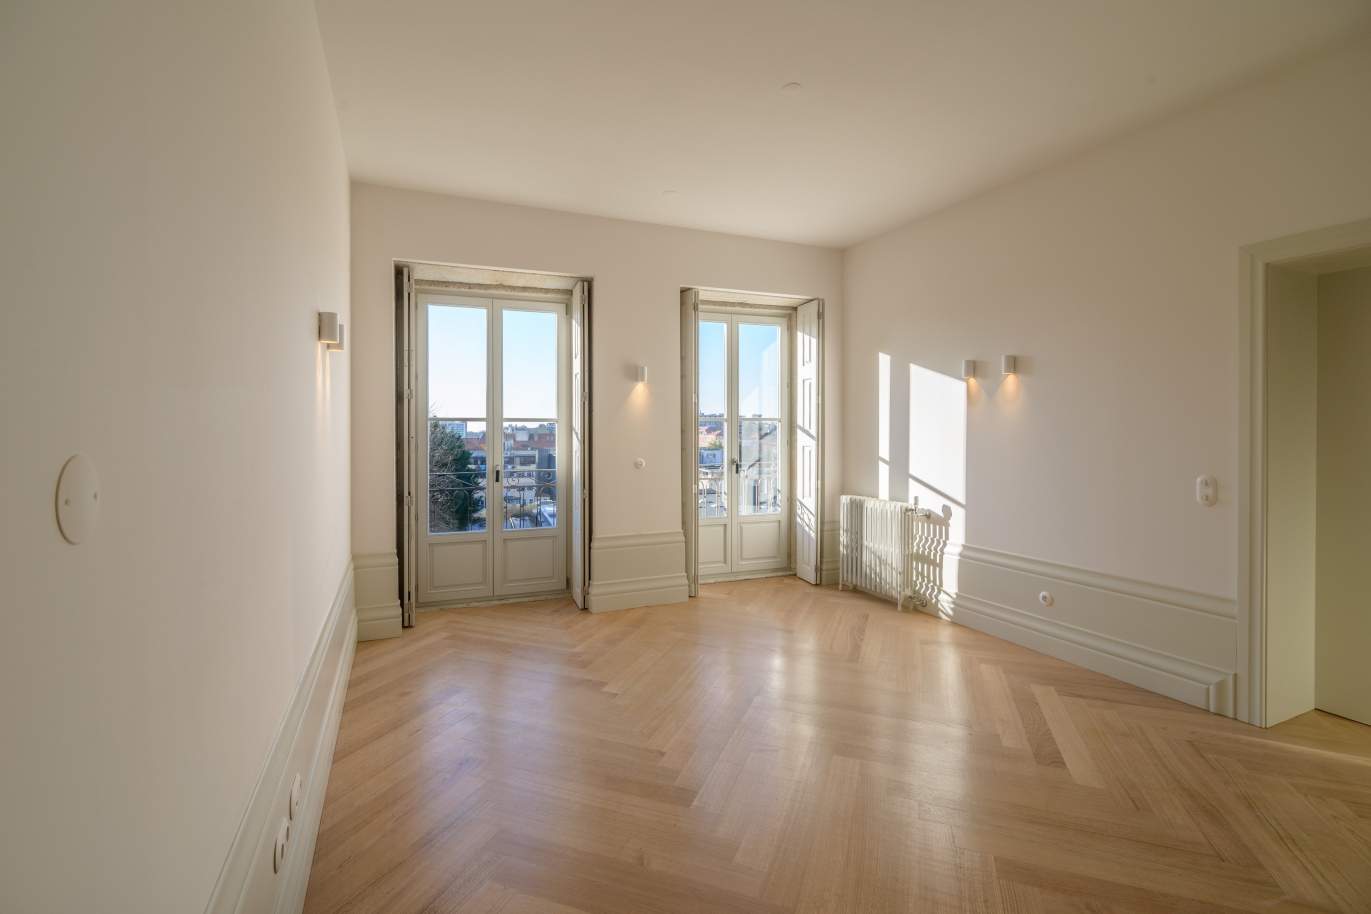 Venda apartamento duplex novo, empreendimento de luxo, Cedofeita, Porto_161628